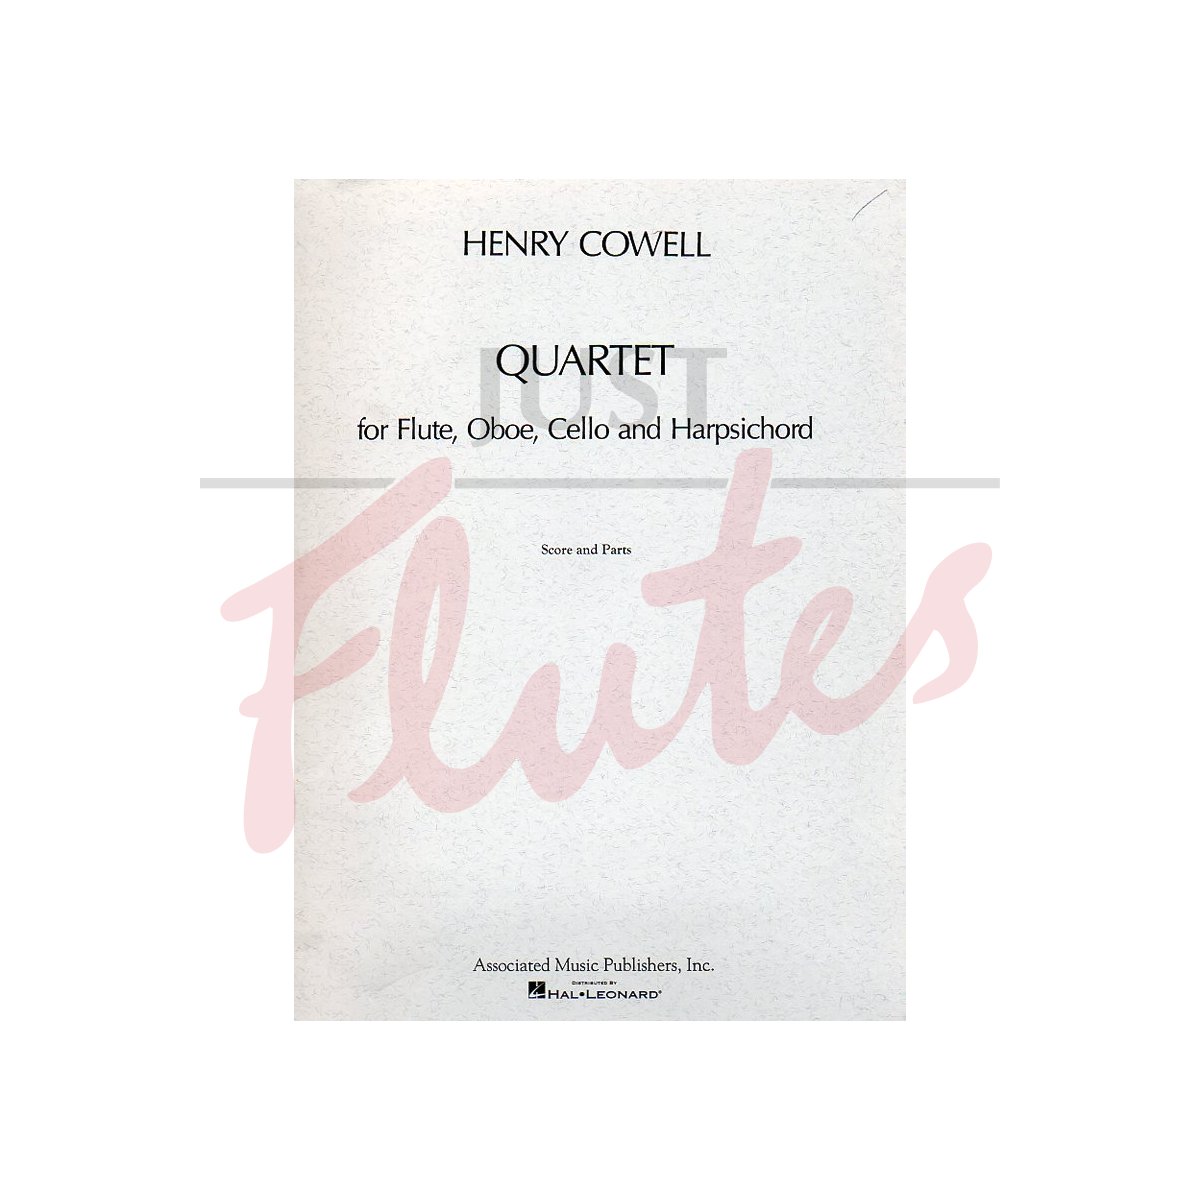 Quartet for Flute, Oboe, Cello and Harpsichord